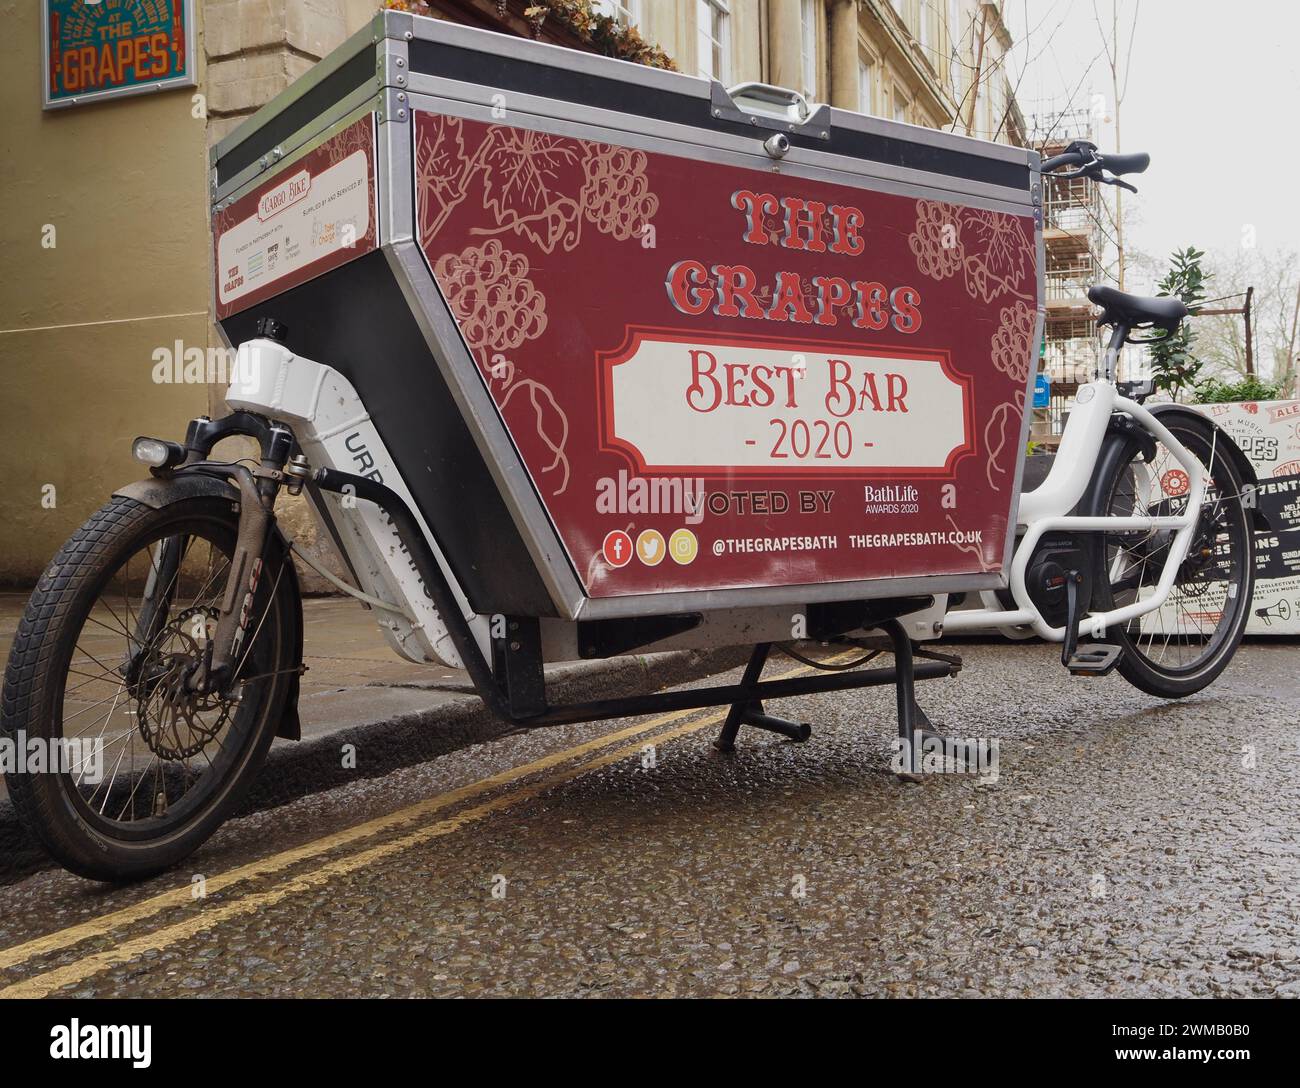 Urban Arrow electric cargo bike, advertising The Grapes pub, Bath, Somerset. Stock Photo